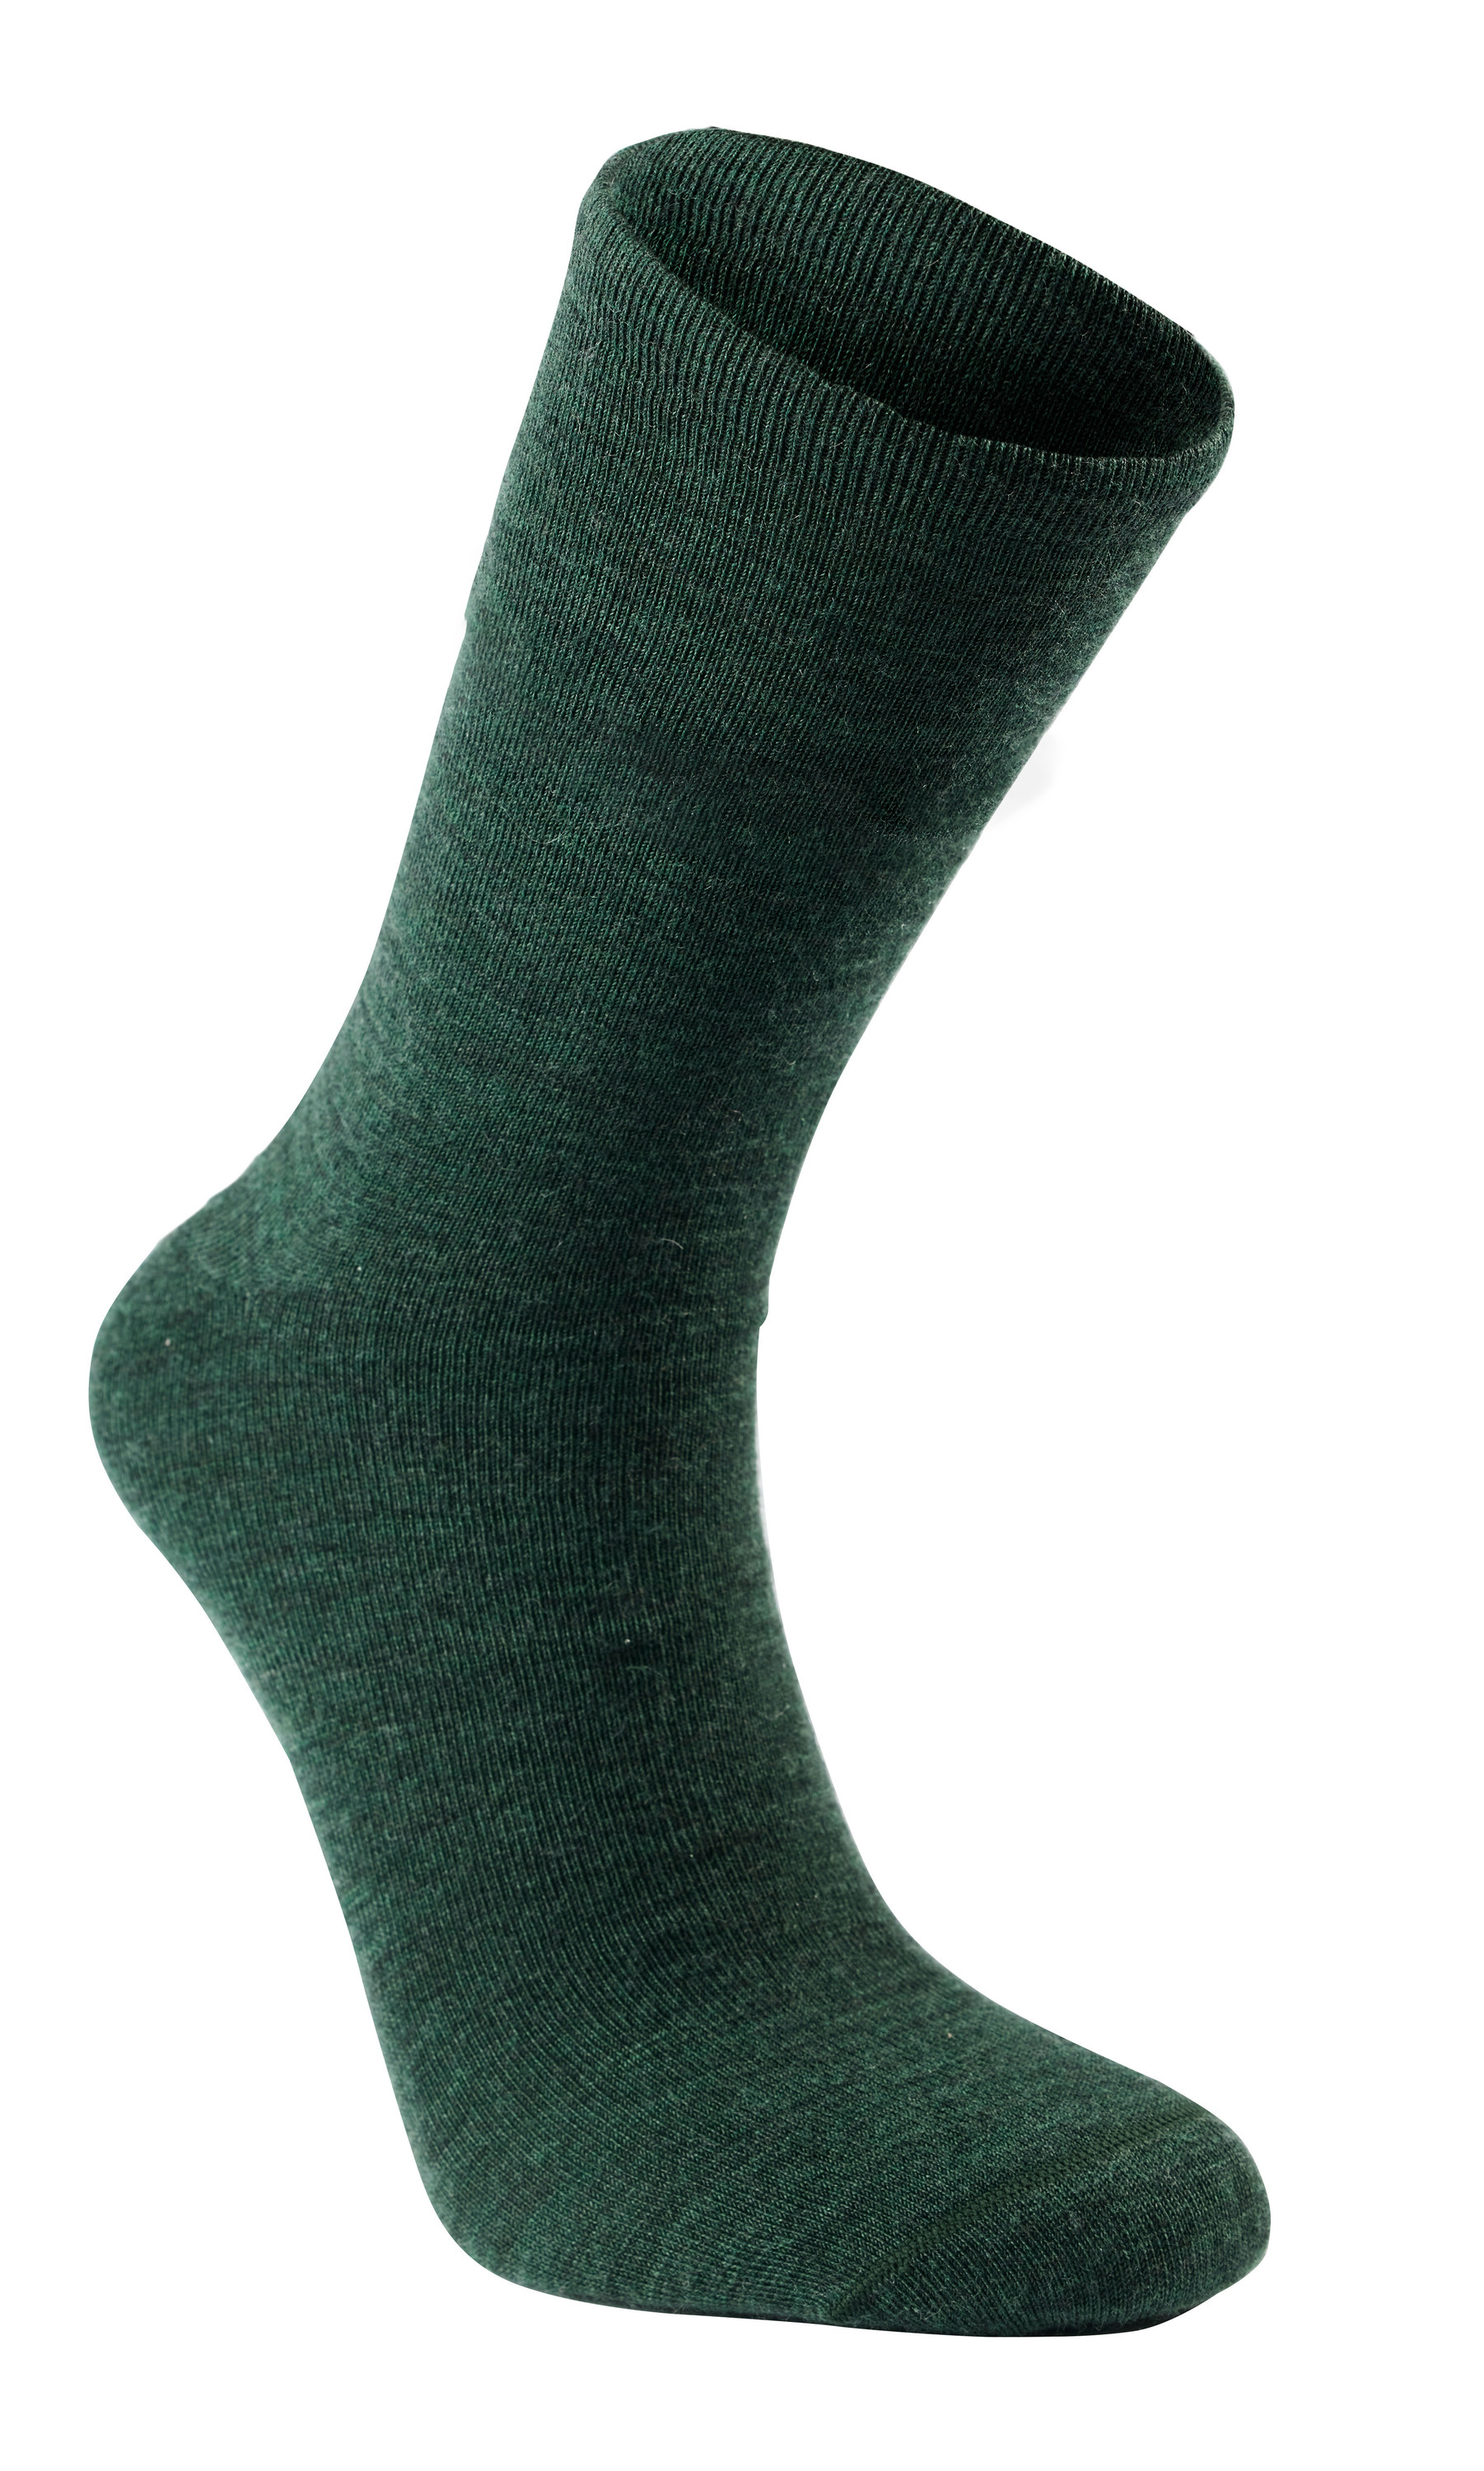 Socks Liner Classic - Forest Green